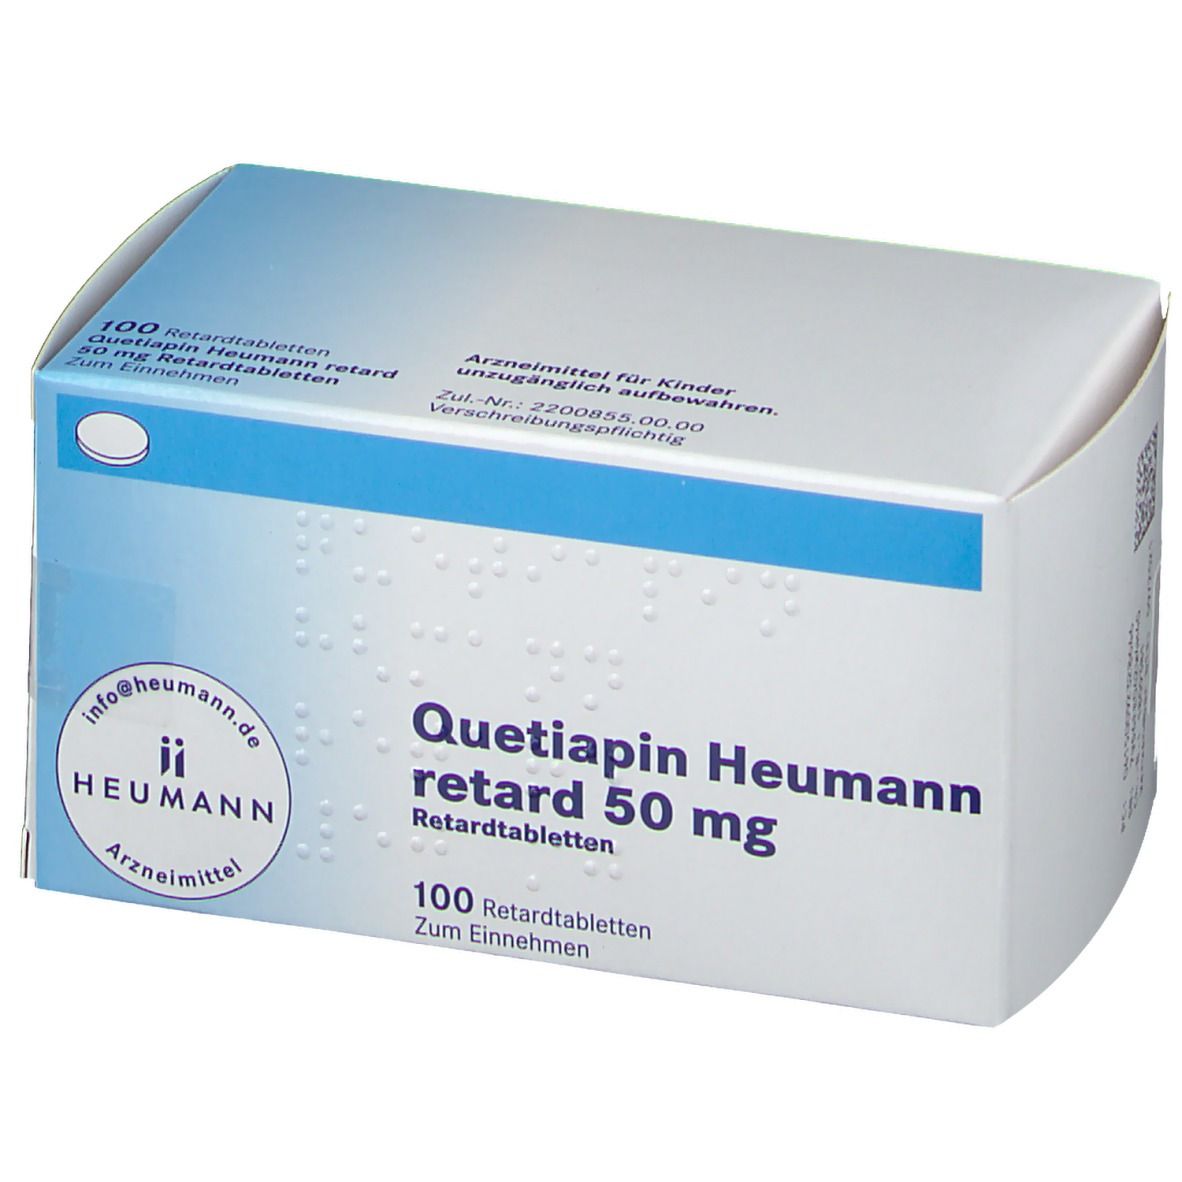 Quetiapin Heumann retard 50 mg